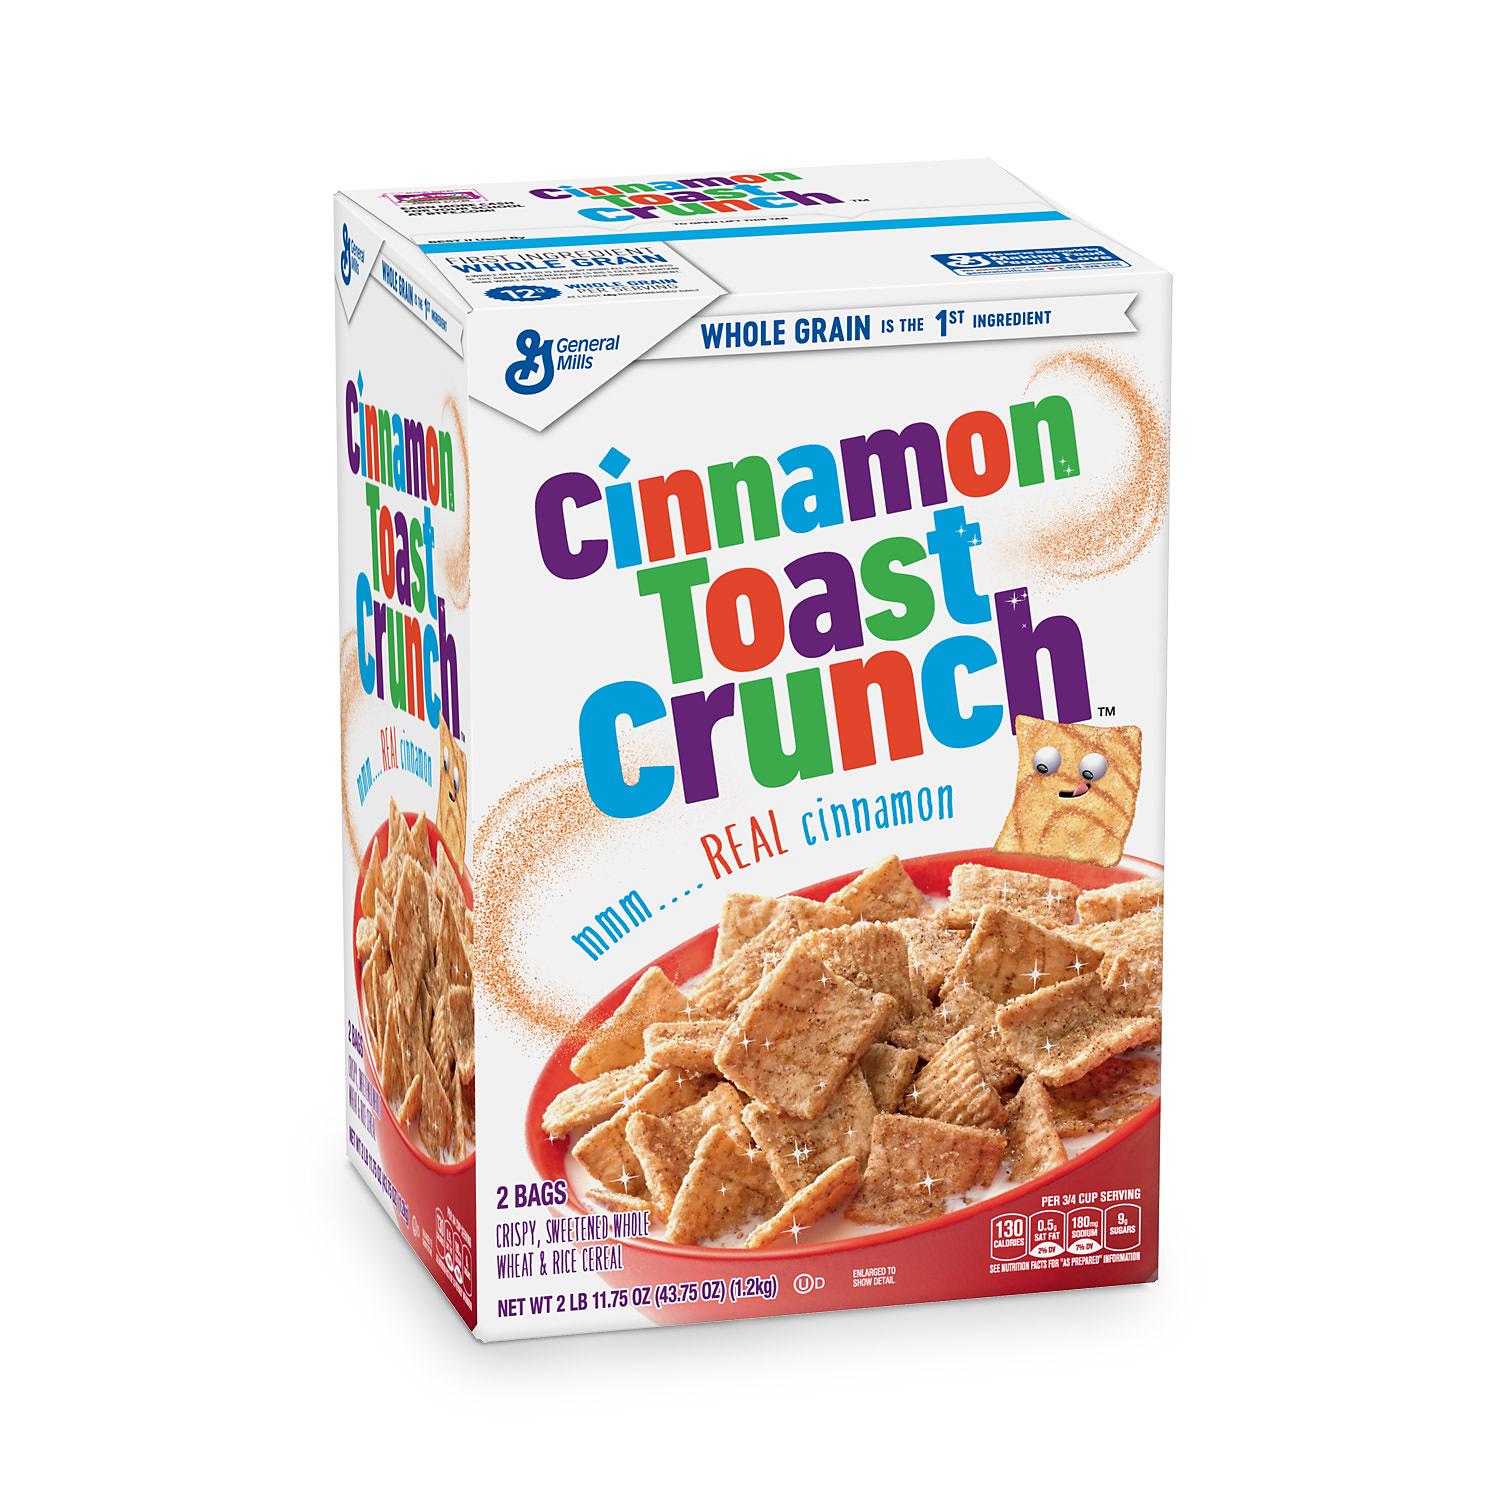 Cinnamon Toast Crunch.jpg